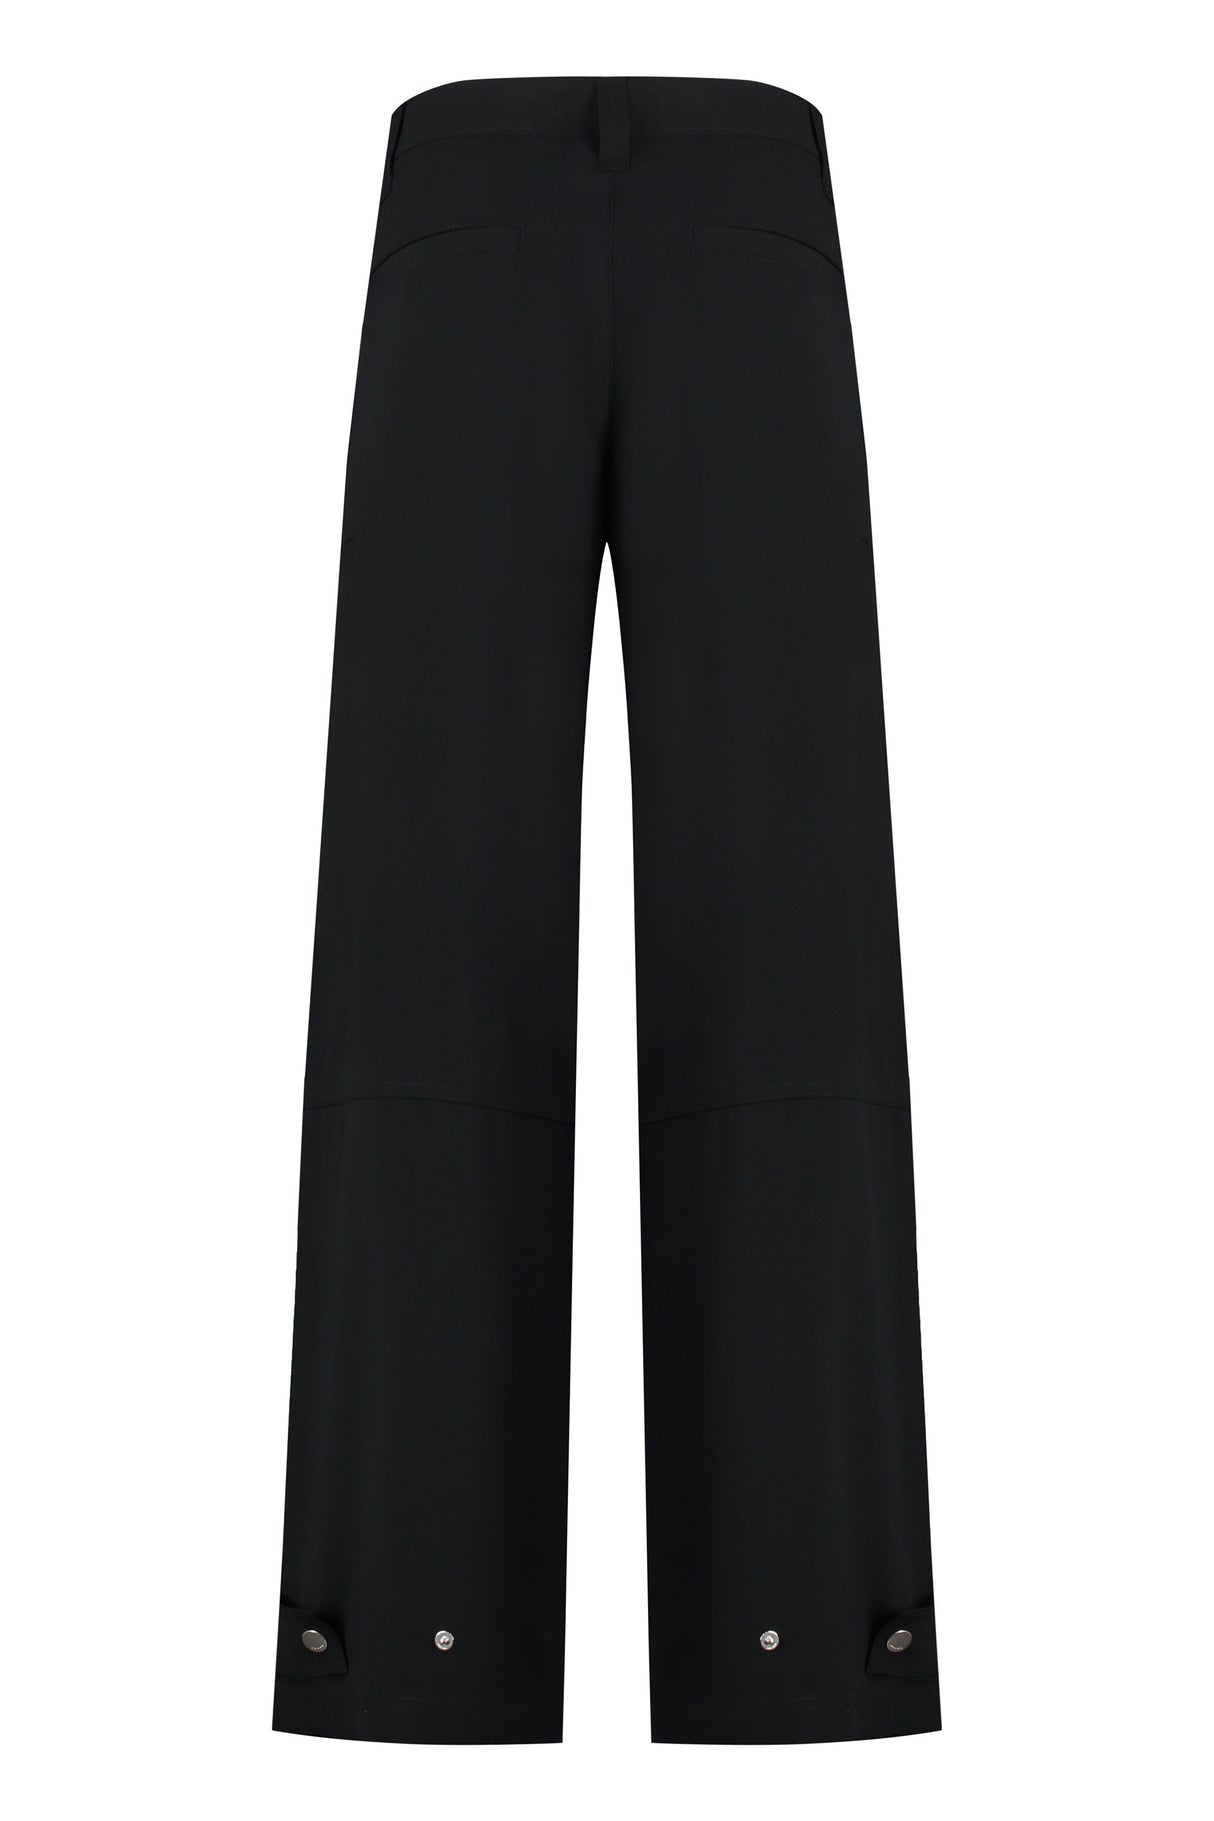 AMI PARIS Black Multi-Pocket Crepe Trousers for Women